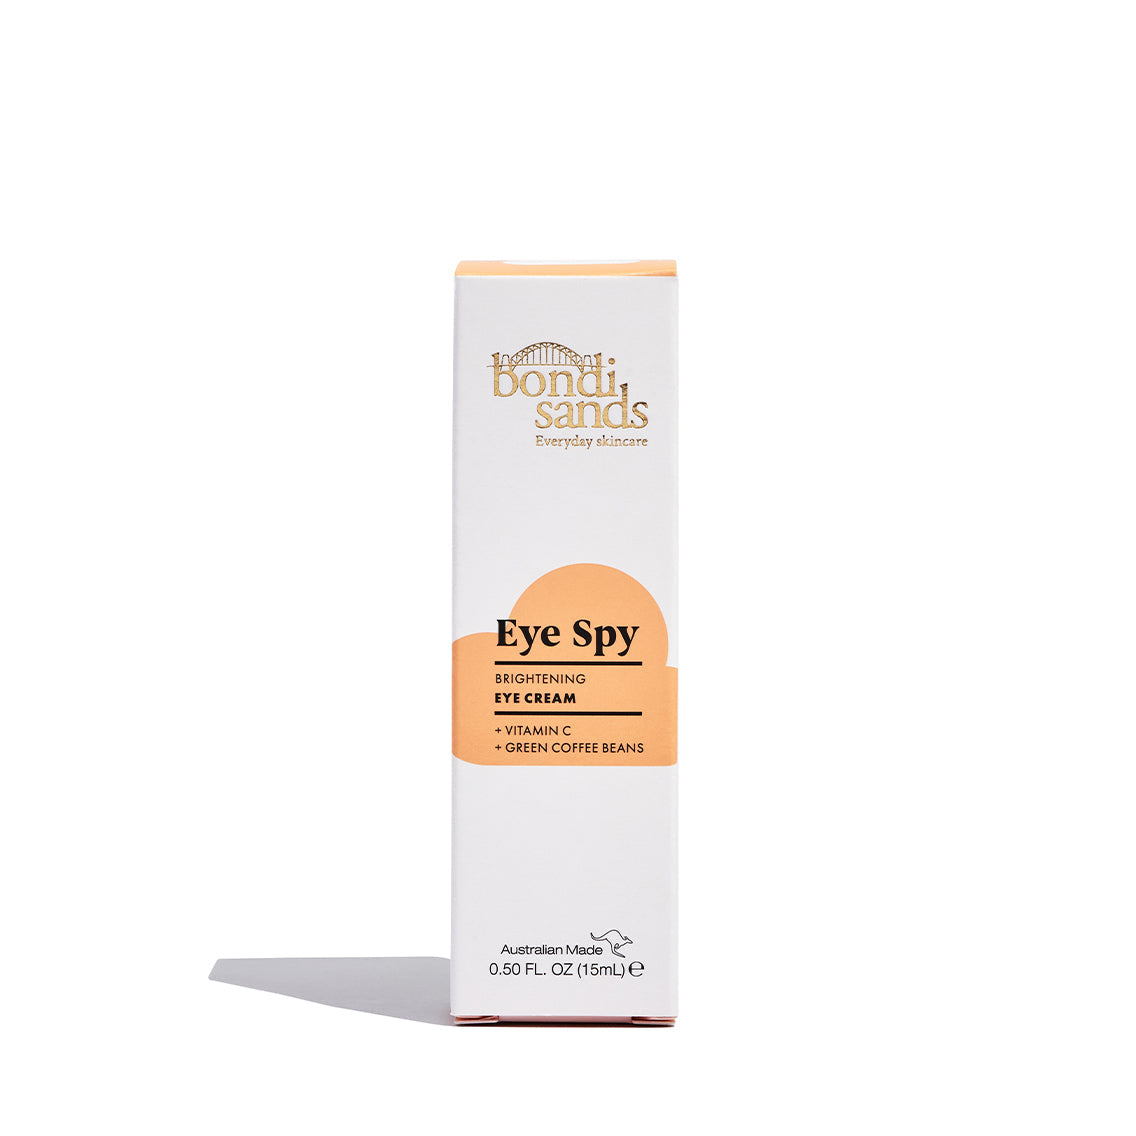 Bondi Sands Eye Spy Vitamin C Eye Cream (15ml) packaging